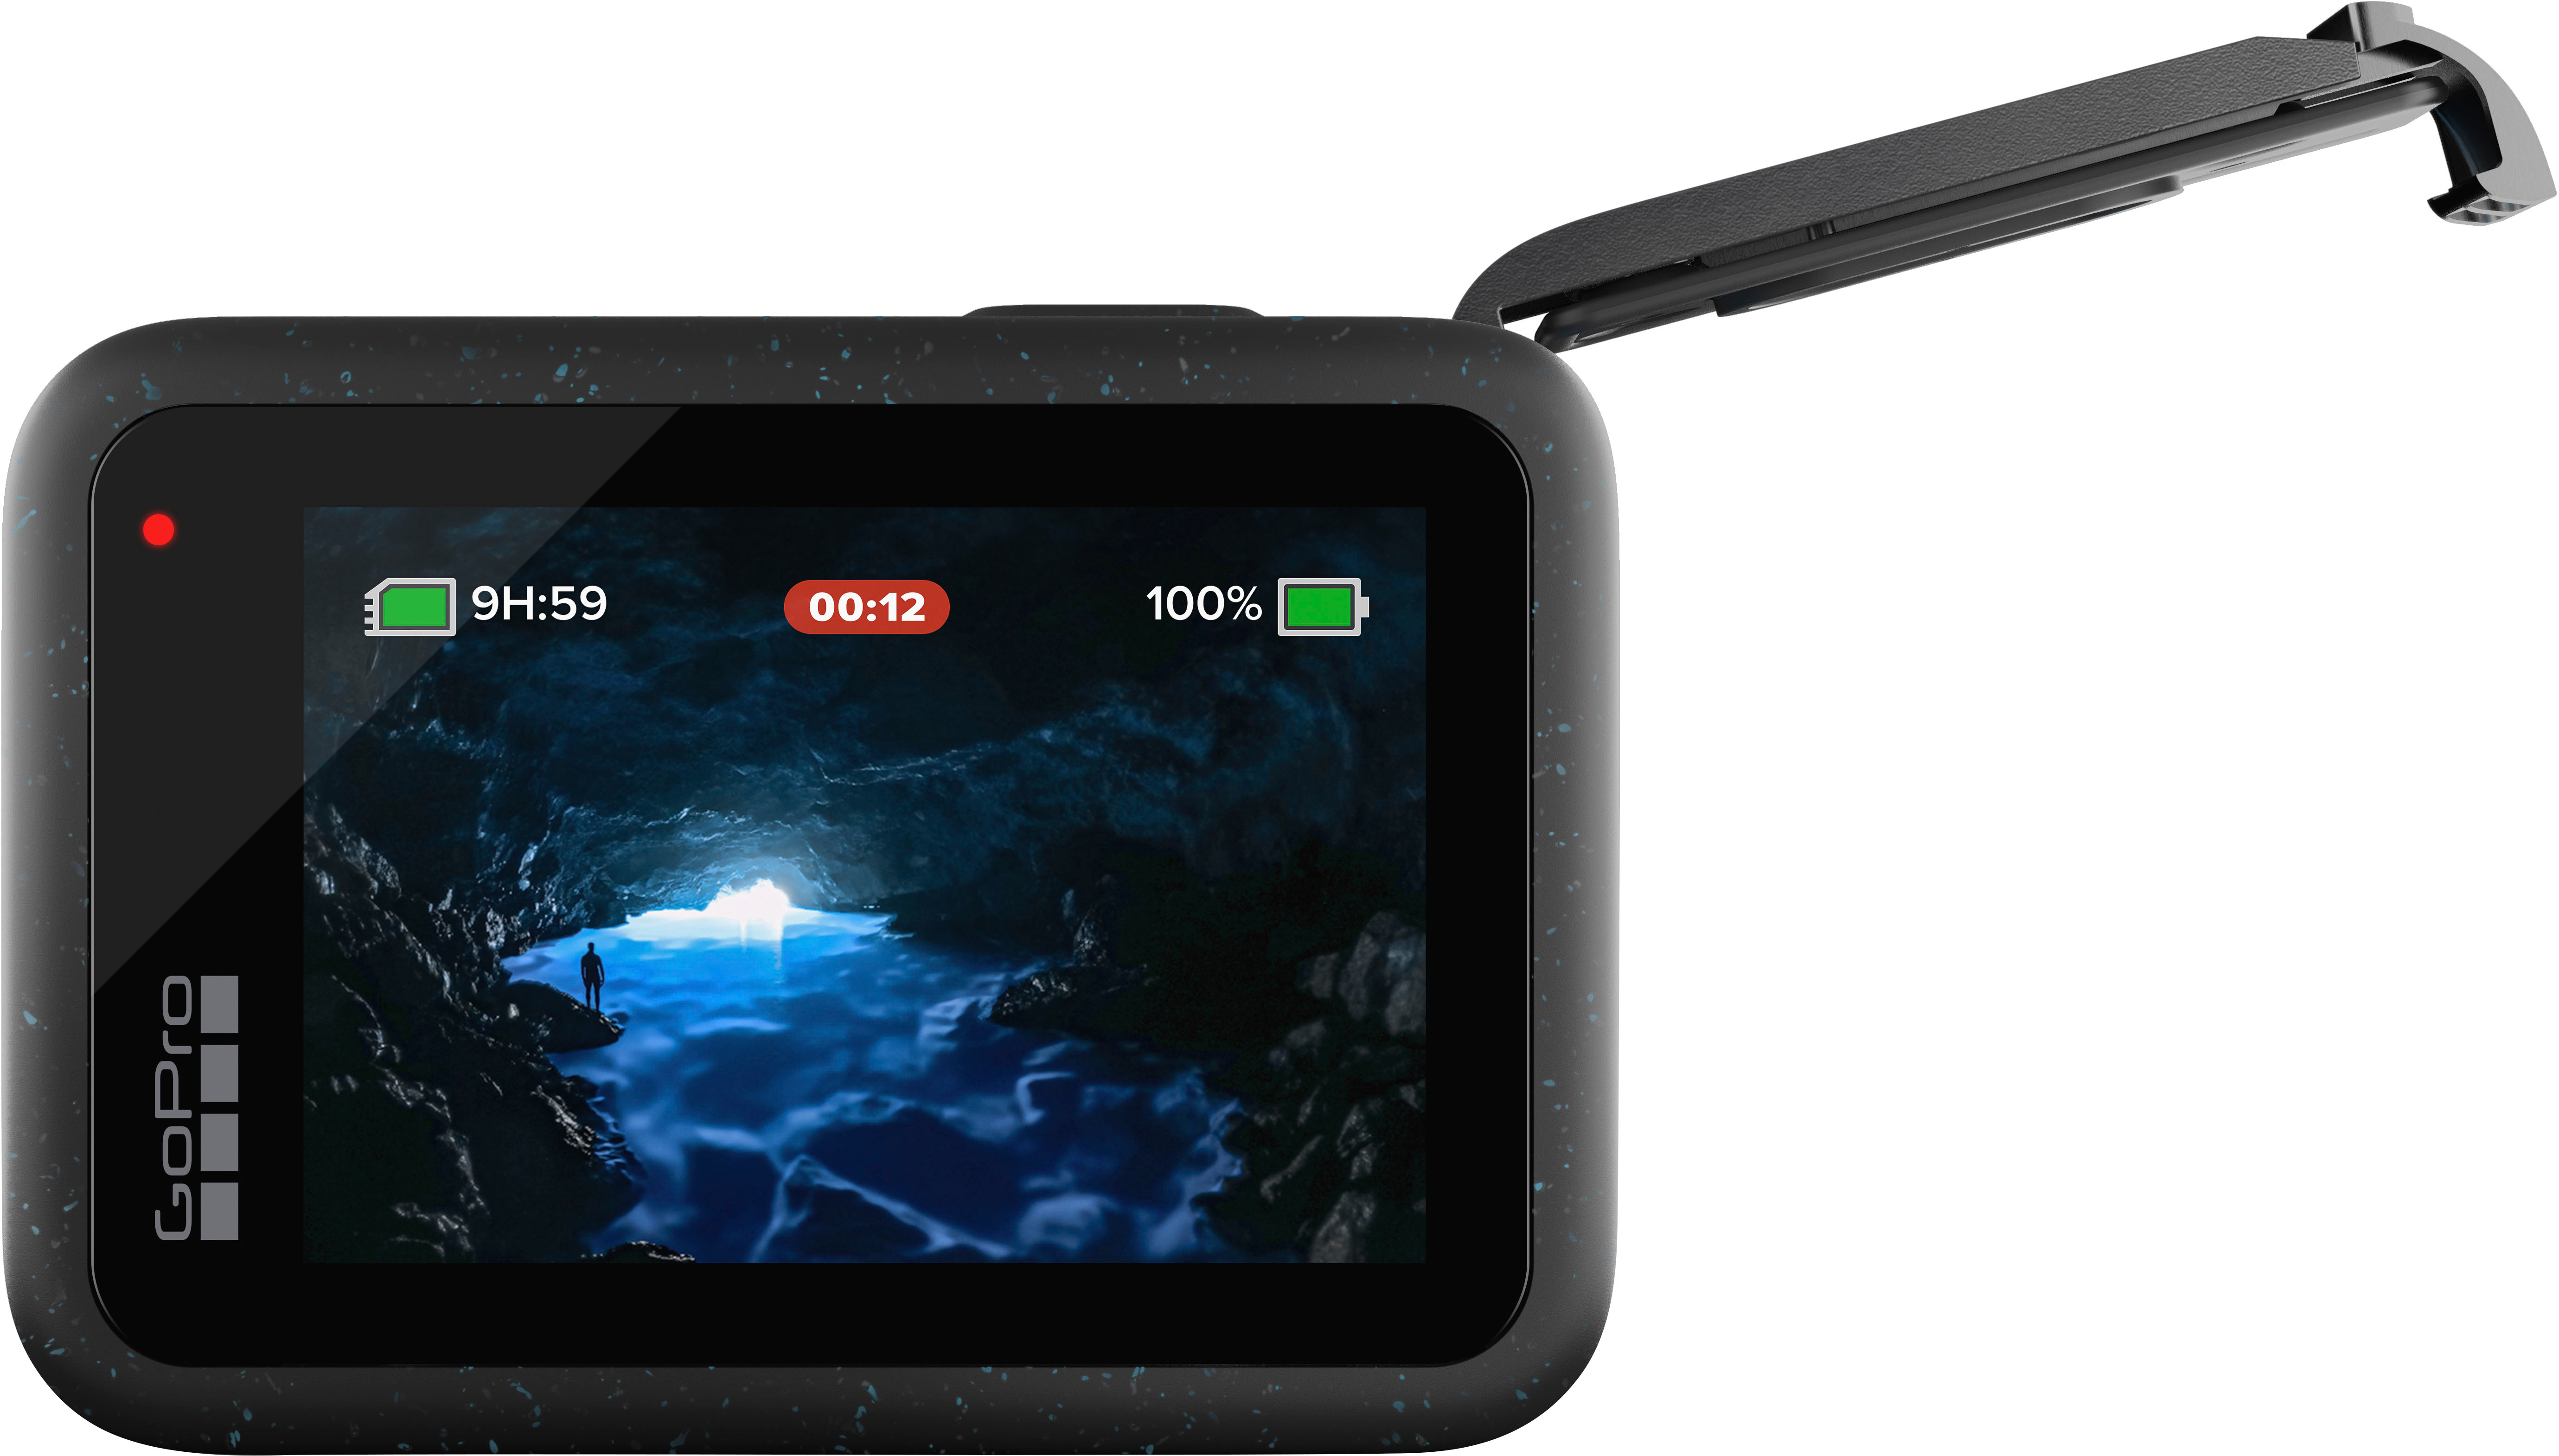 GoPro HERO12 Black Action Camera (Waterproof + Stabilization)